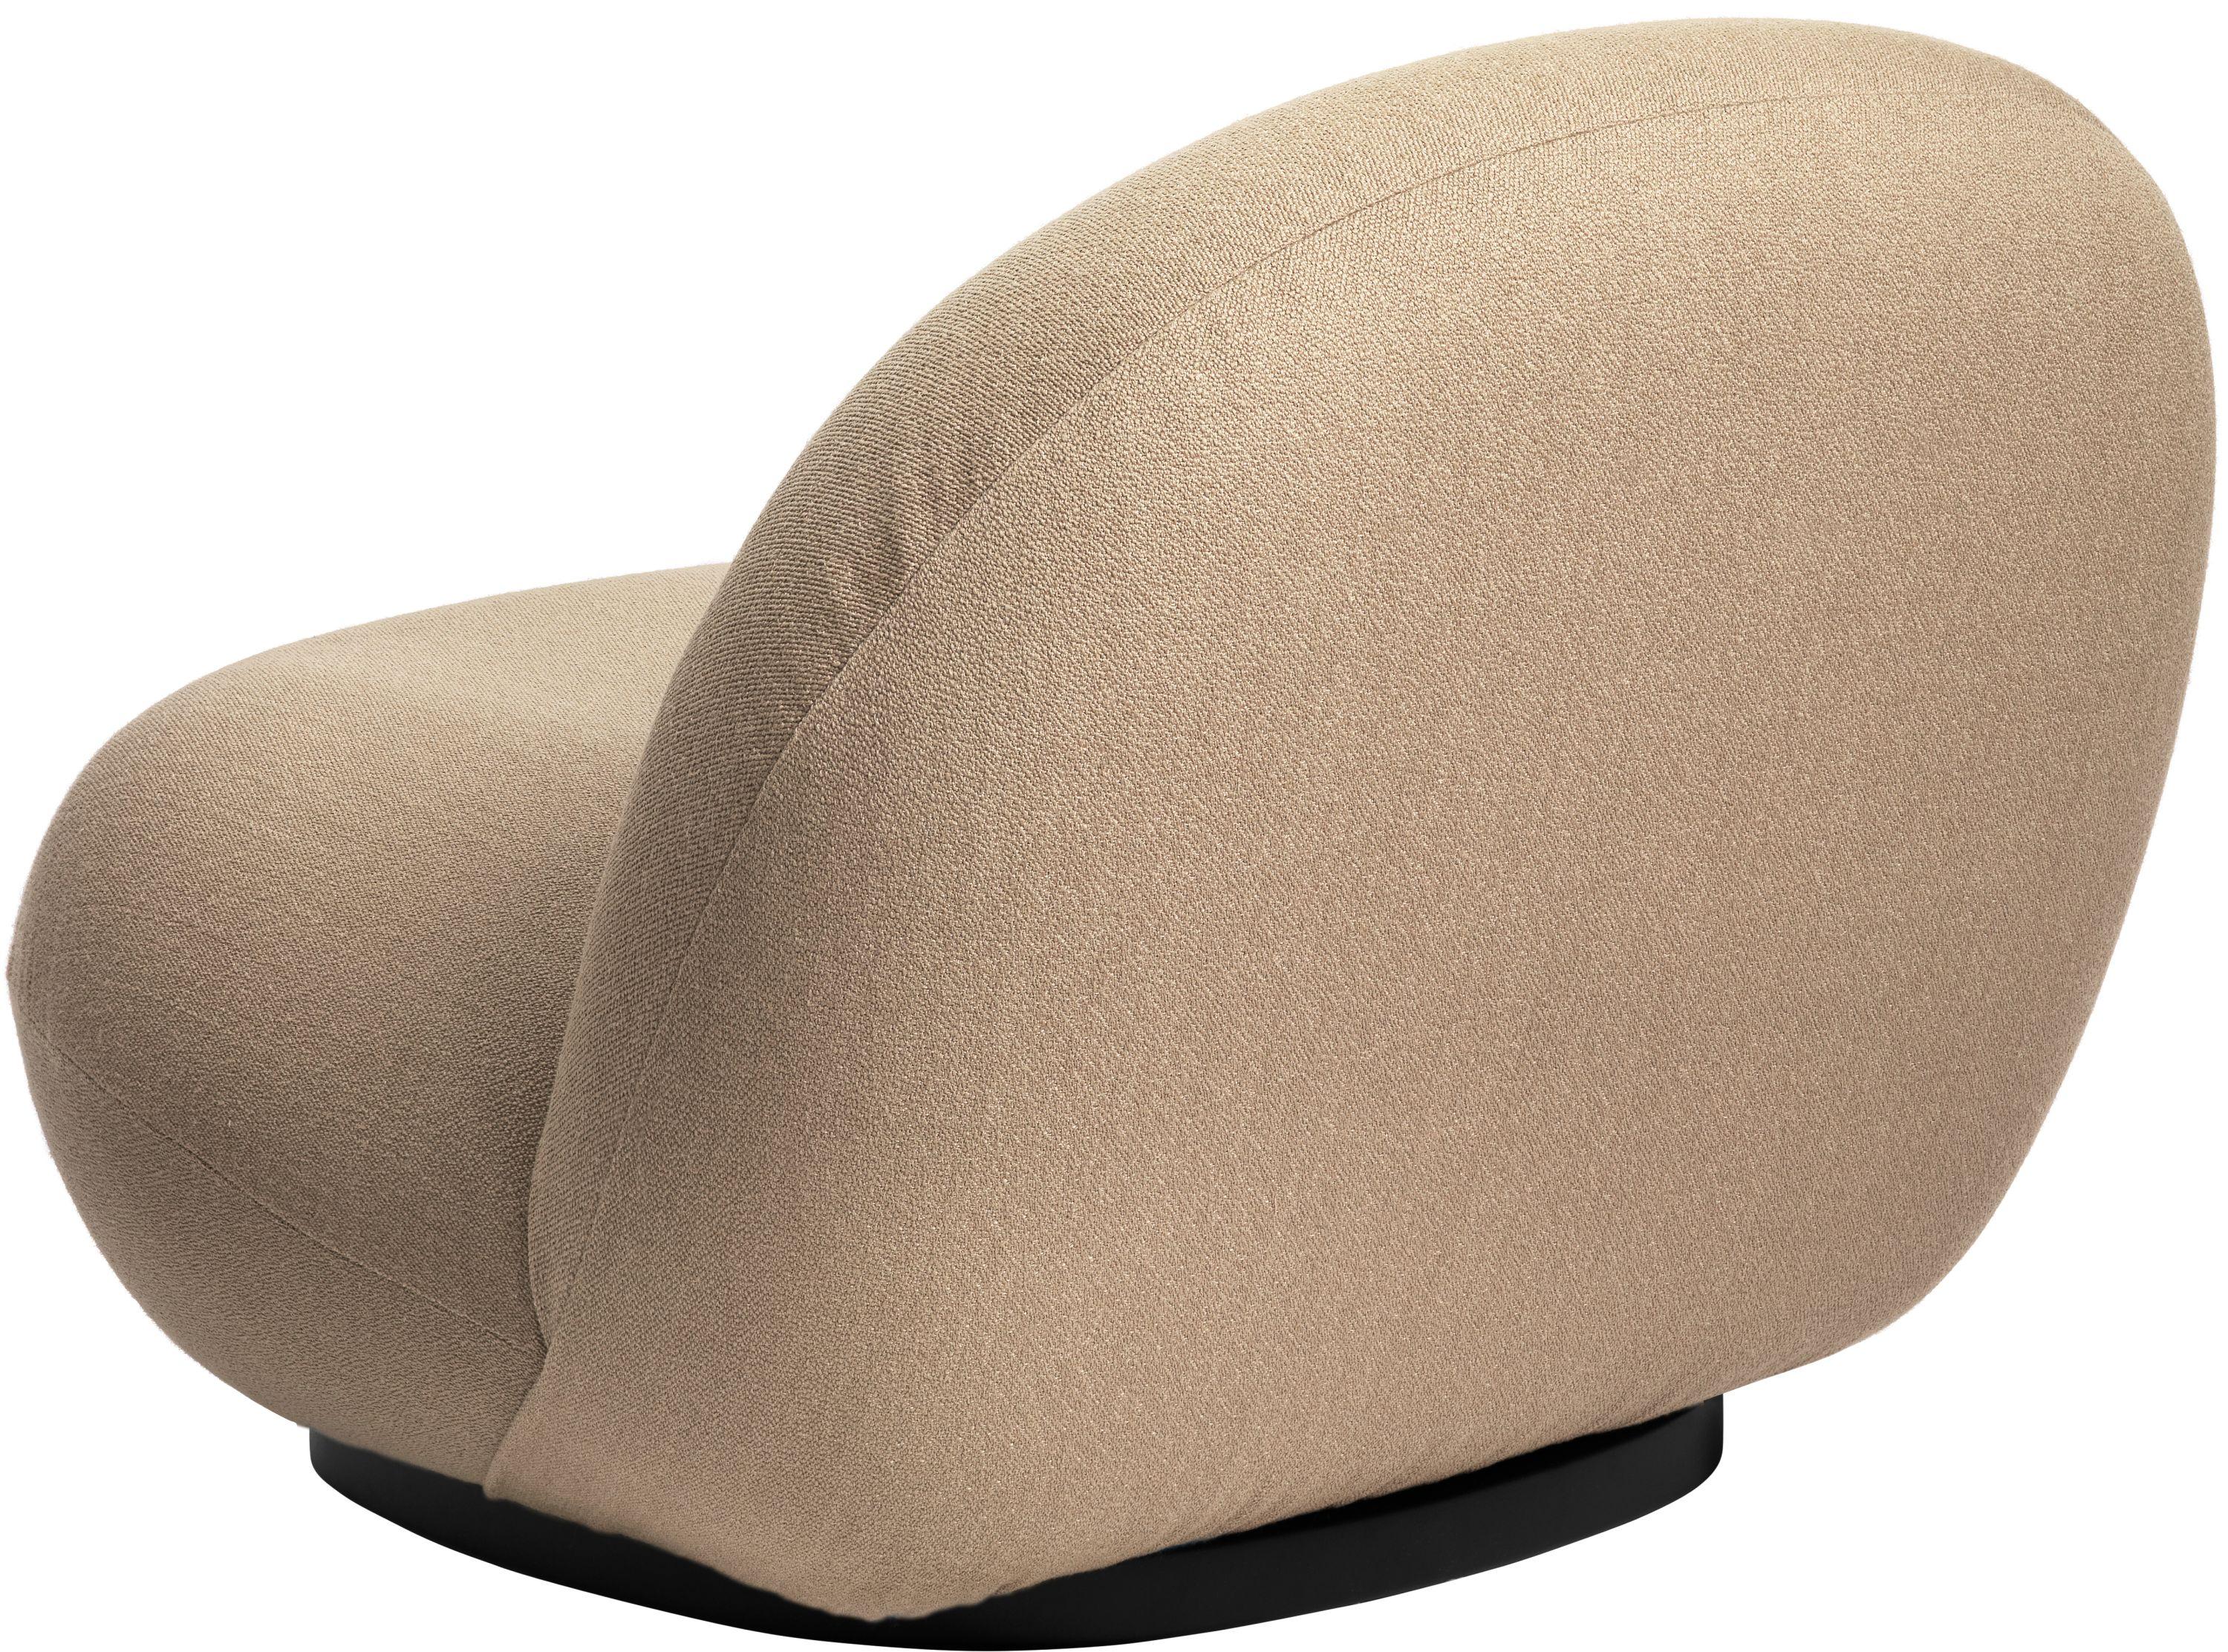 Pierre Paulin Pacha Lounge Chair Upholstered in Vidar Kvadrat Boucle '0222' For Sale 7